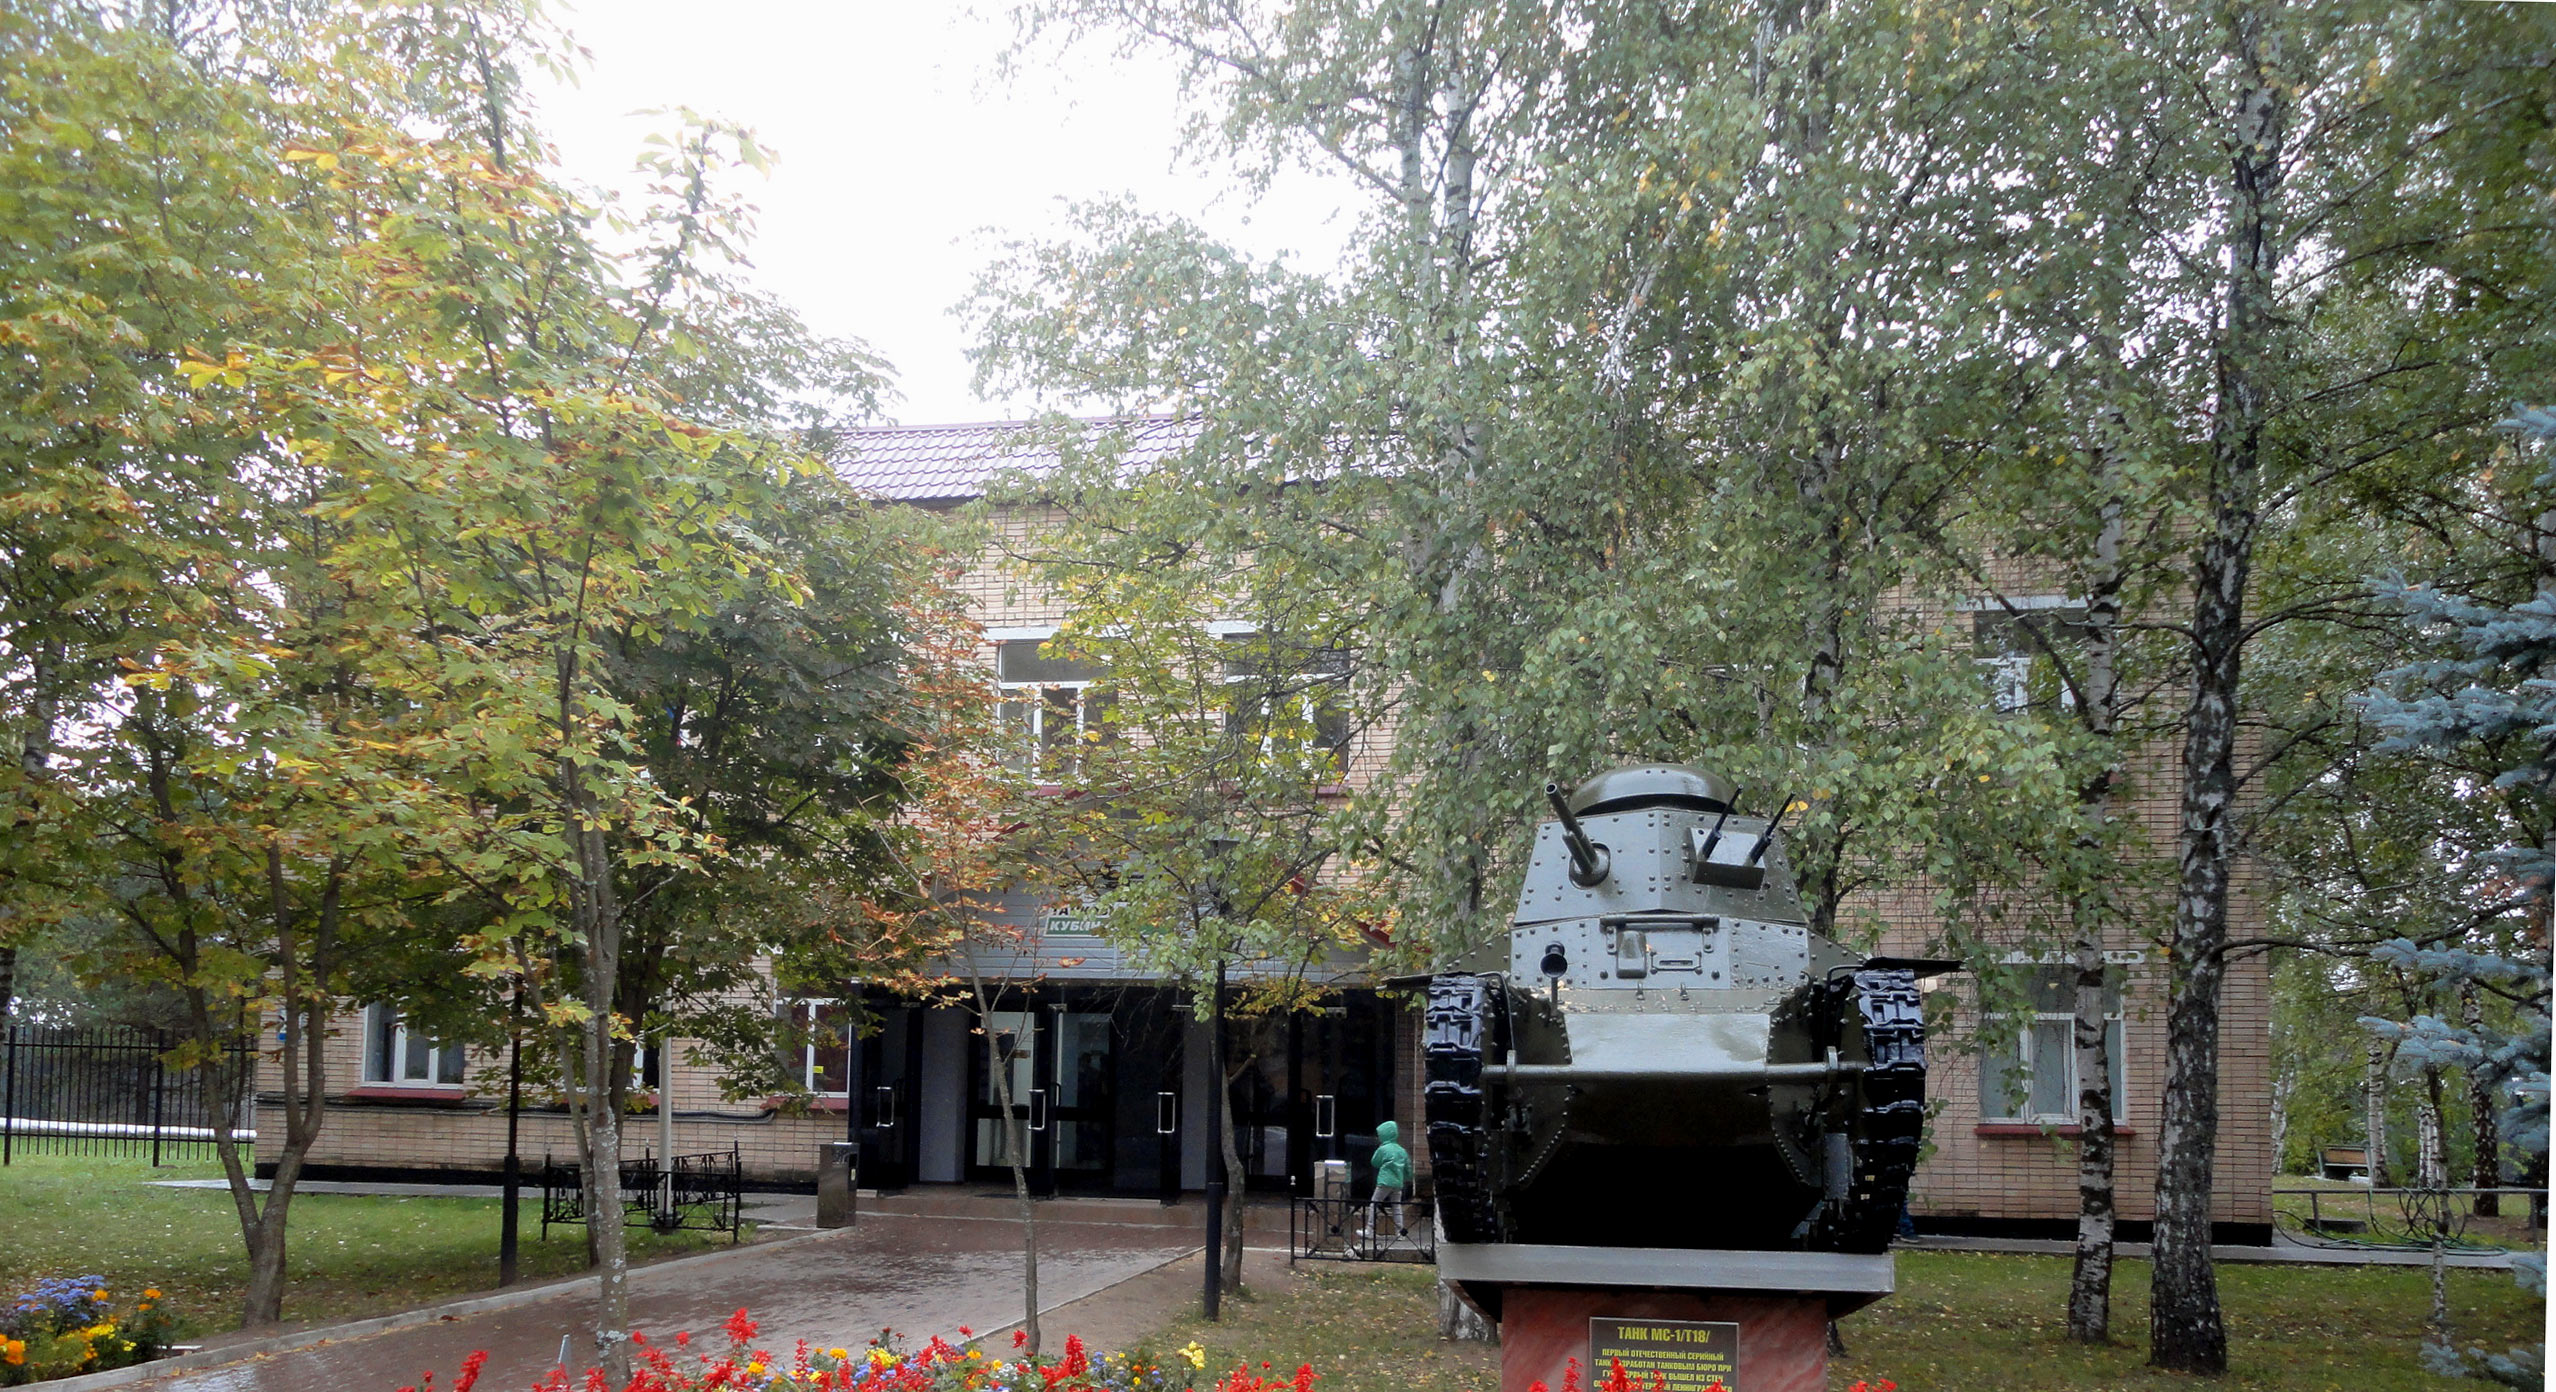 kubinka tank museum virtual tour